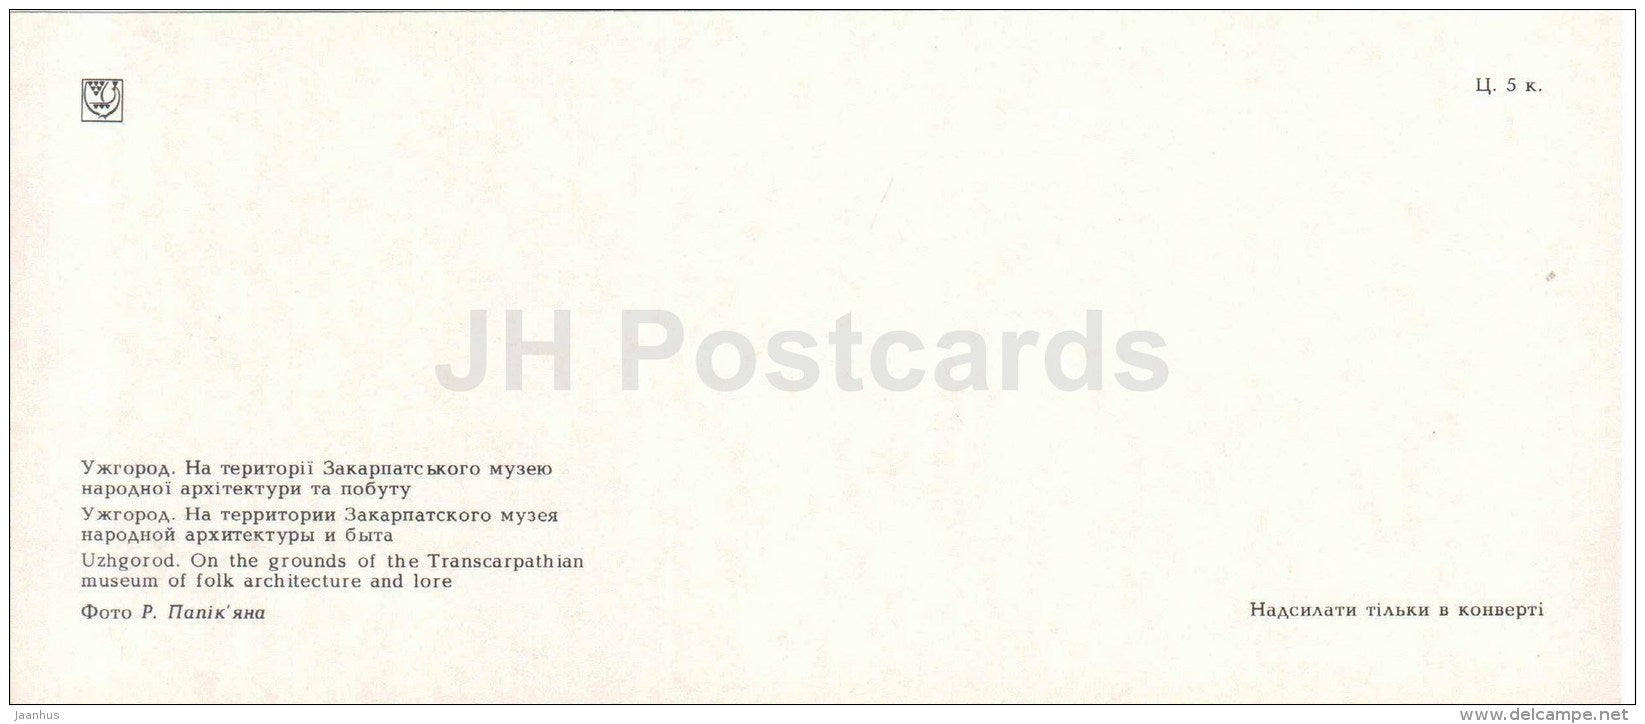 on the grounds of Transcarpathian museum of folk and architecture - Uzhgorod - Uzhhorod - 1986 - Ukraine USSR - unused - JH Postcards